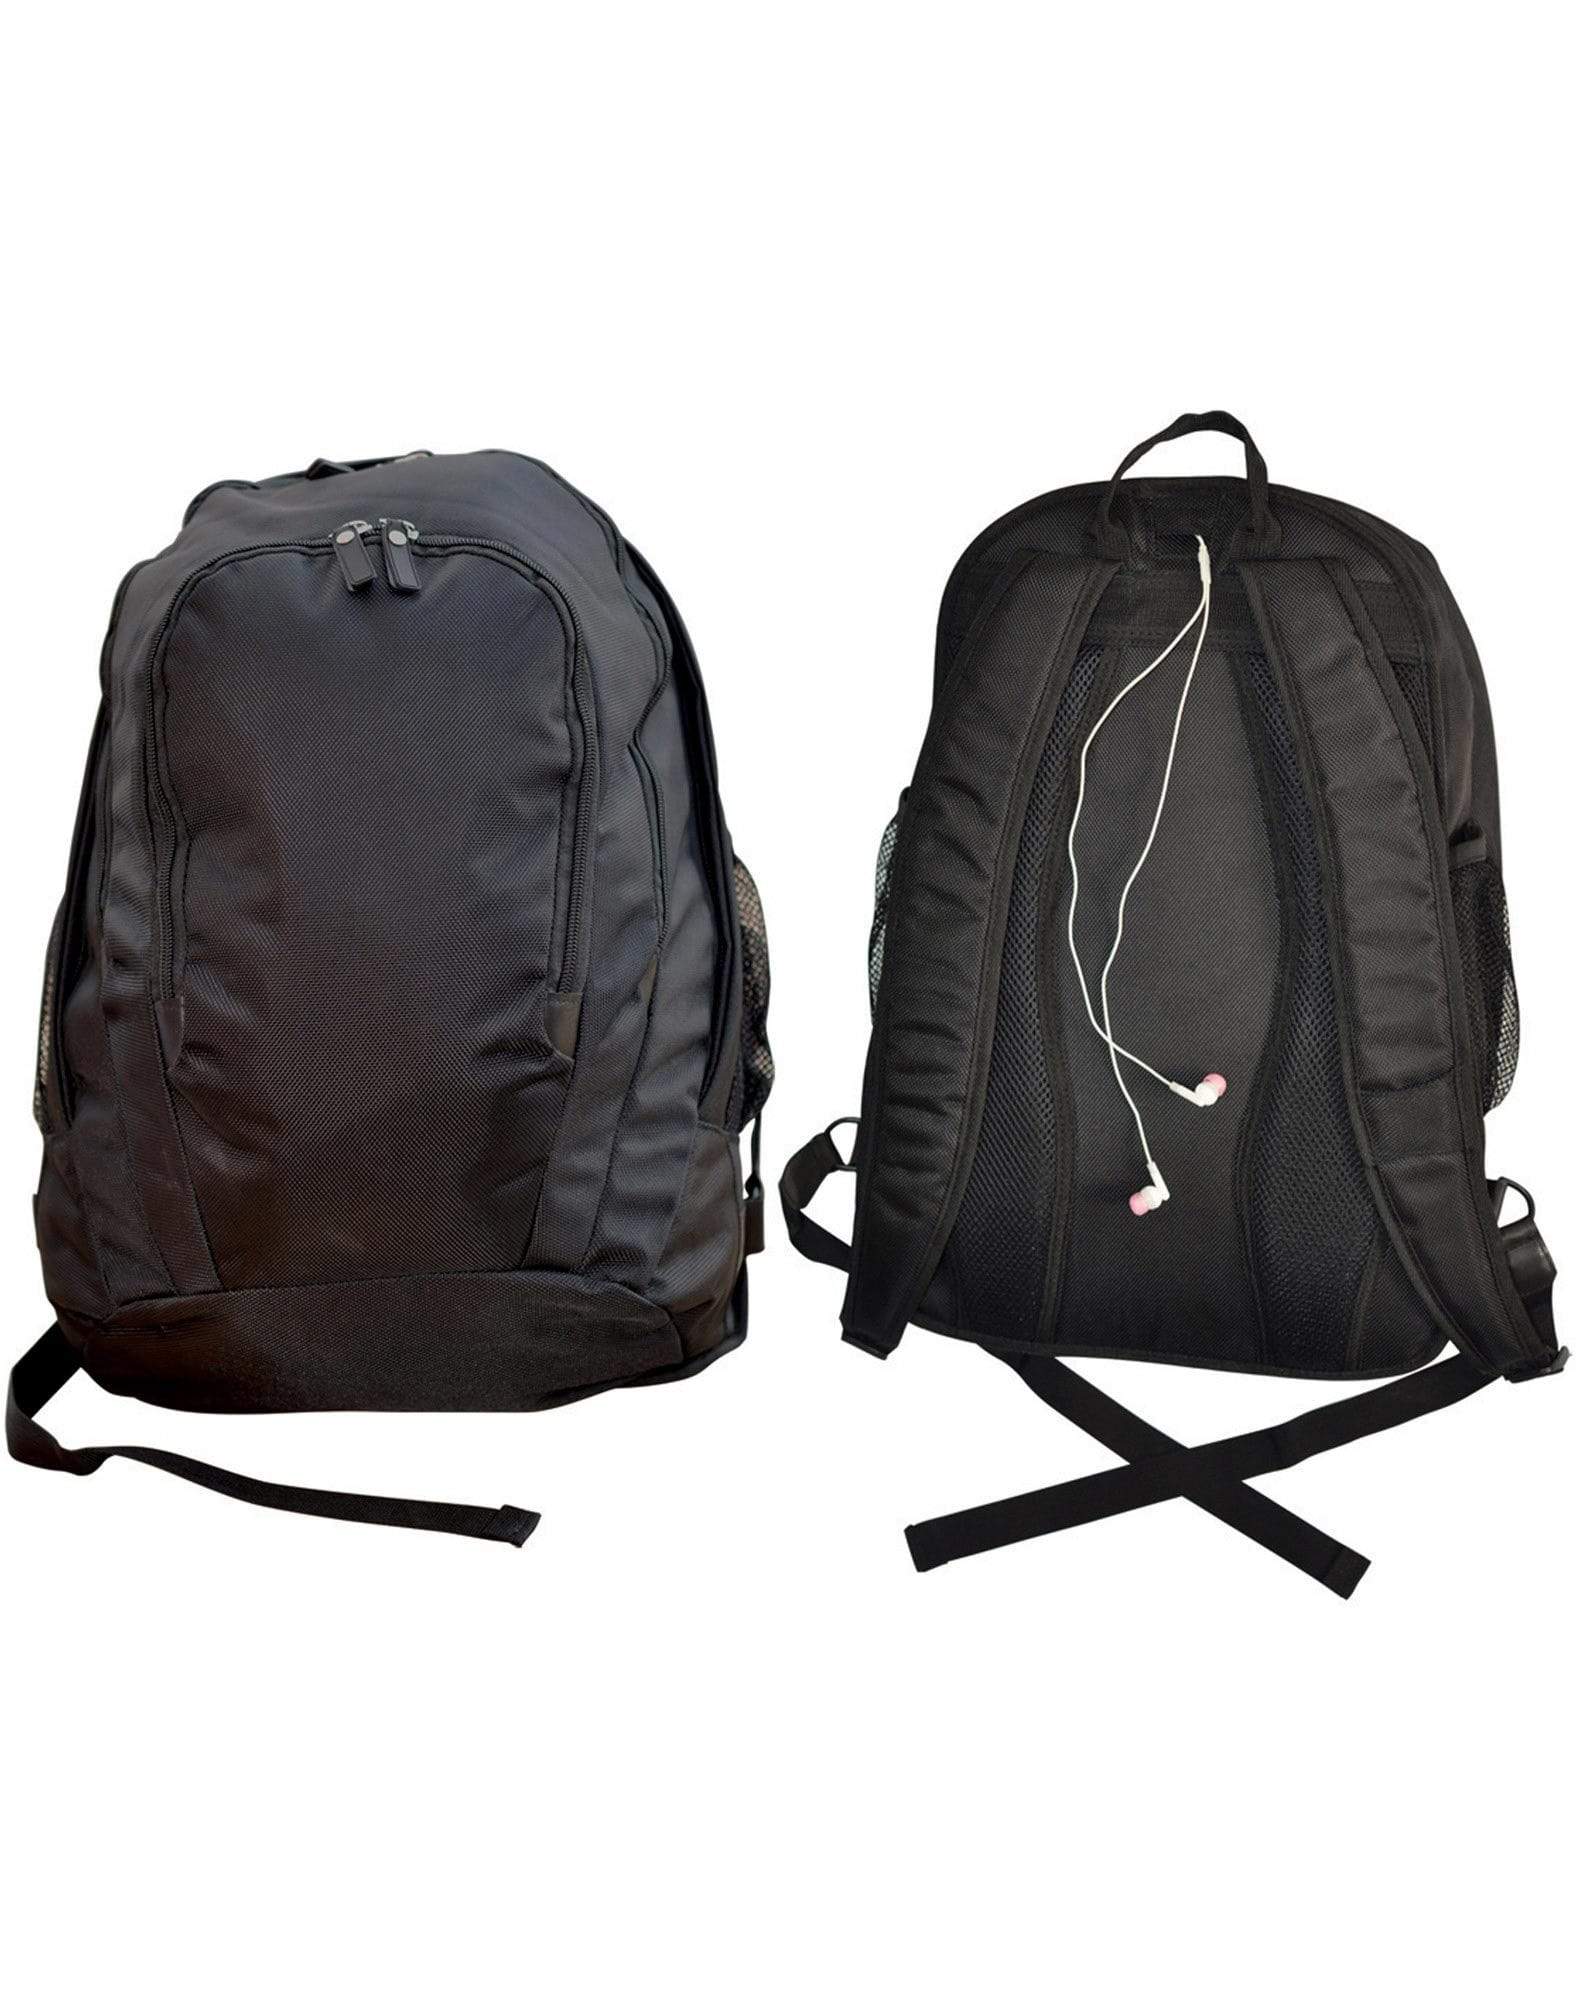 Excutive Backpack B5000 Active Wear Winning Spirit Black "(w)33cm x (h)49cm x (d)19cm, Capacity: 30.7 Litres" 